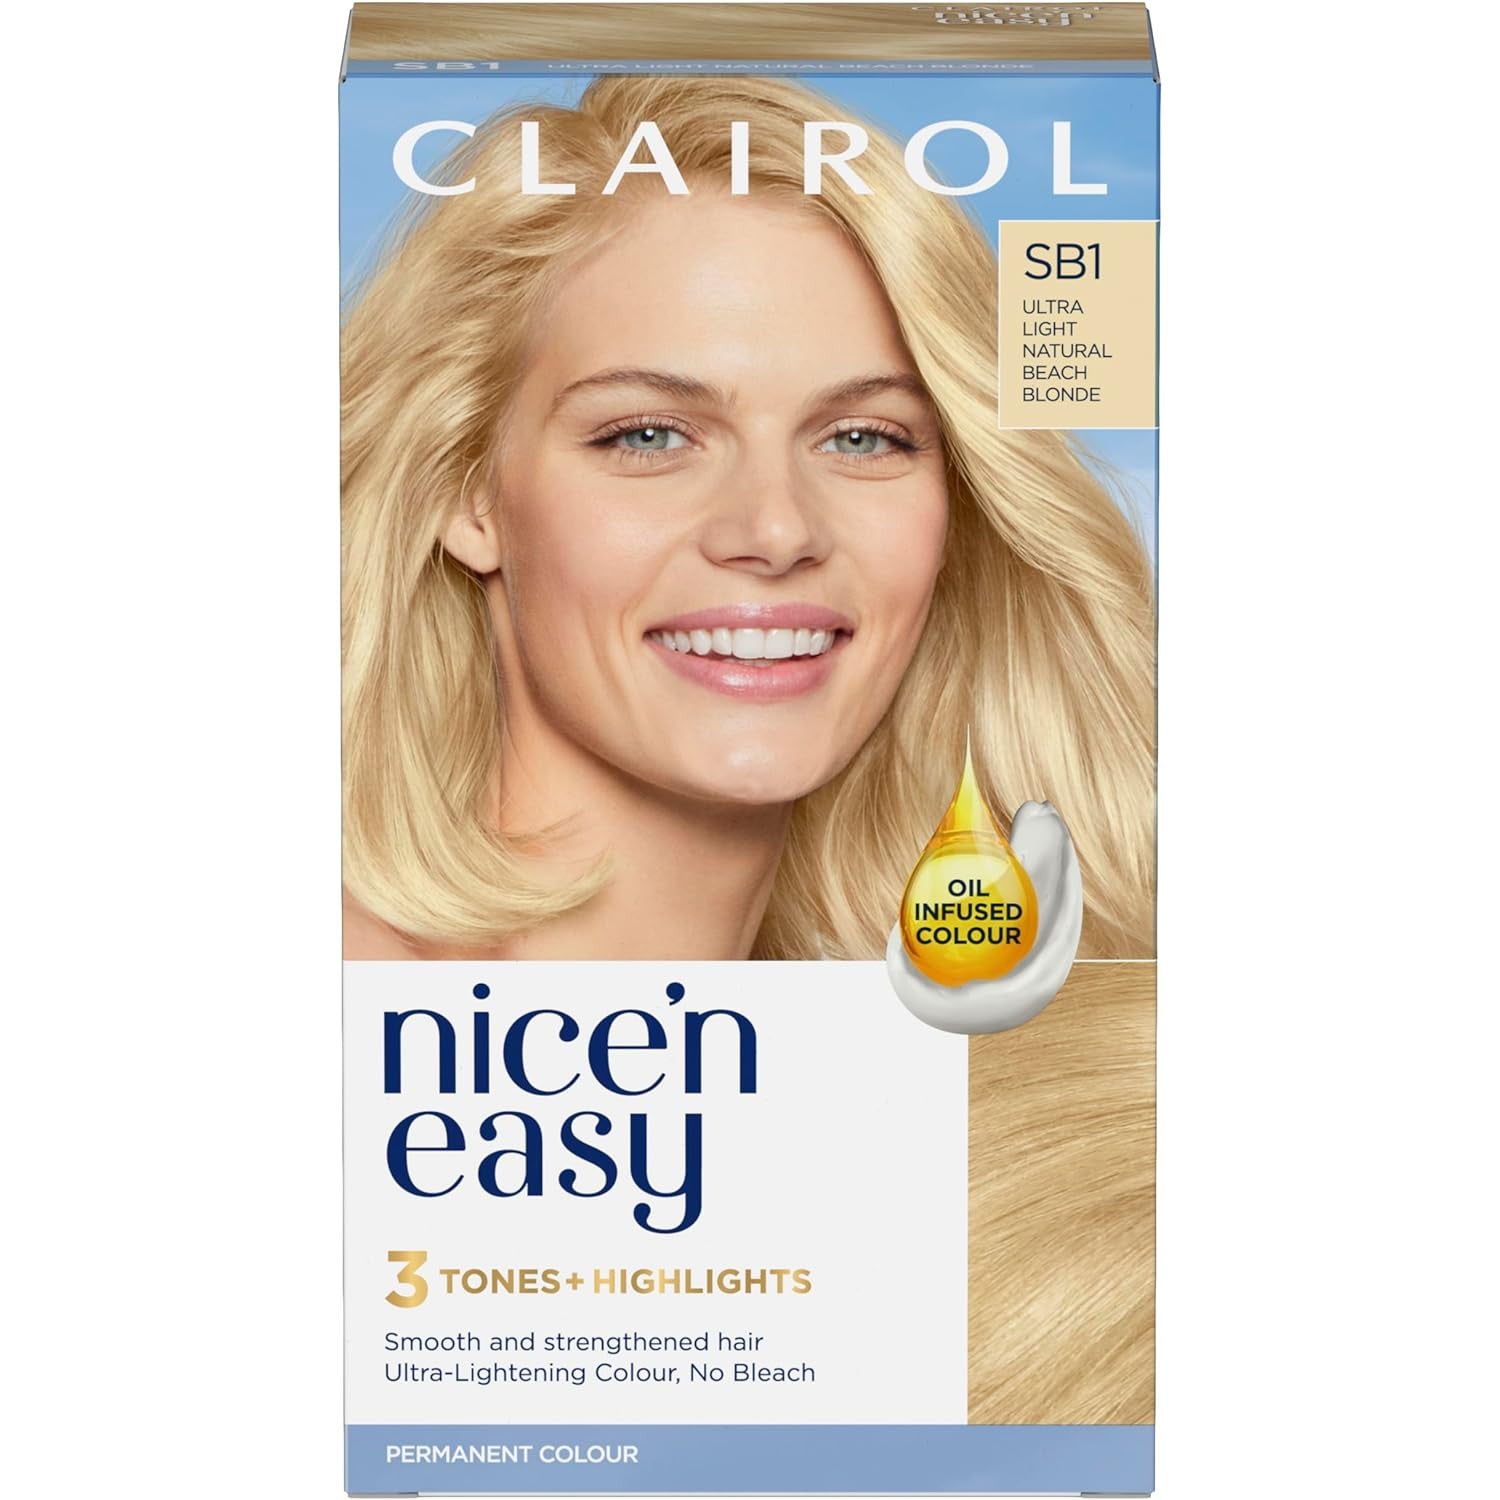 Clairol Nice'n Easy Crème, Permanent Hair Dye, SB1 Ultra Light Natural Beach Blonde